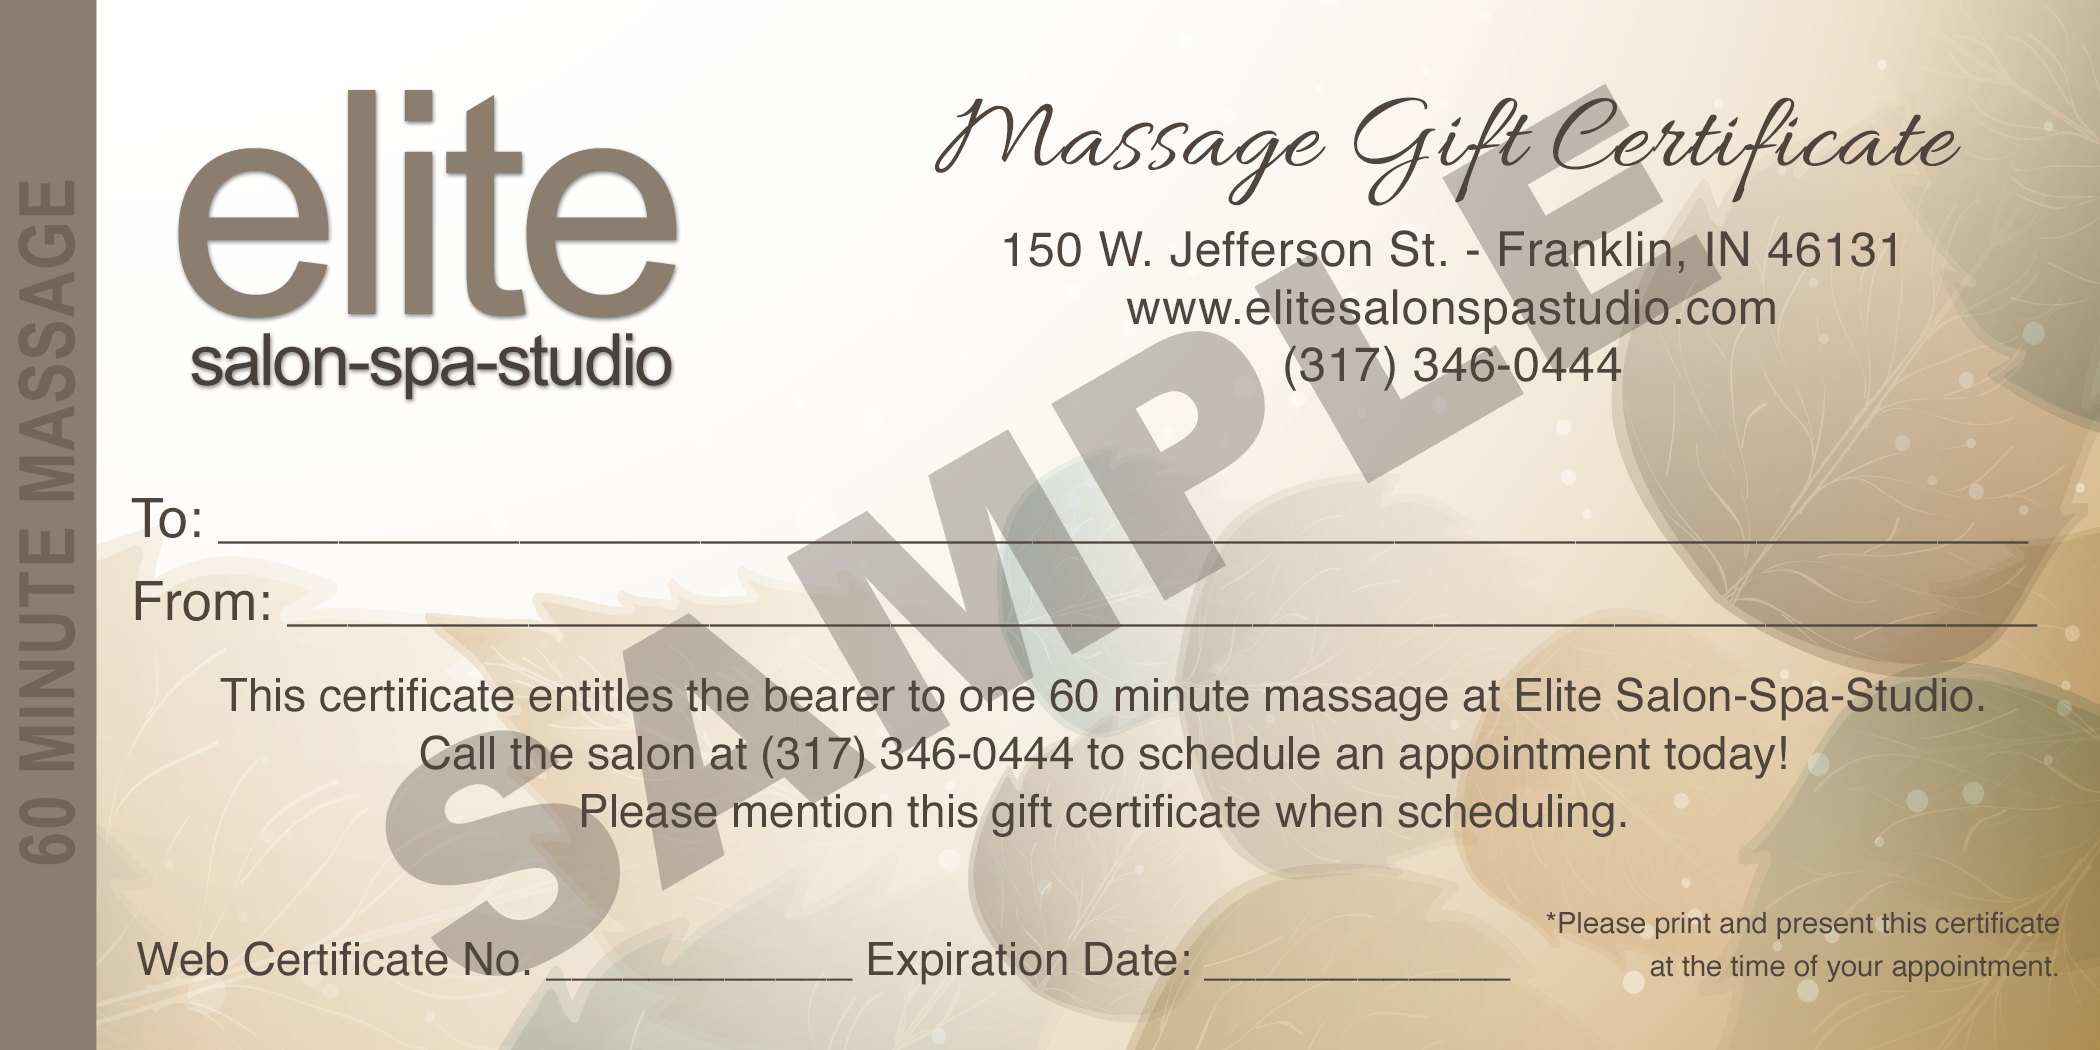 Massage Gift Certificate Sample – Elite Salon Spa Studio Inside Salon Gift Certificate Template